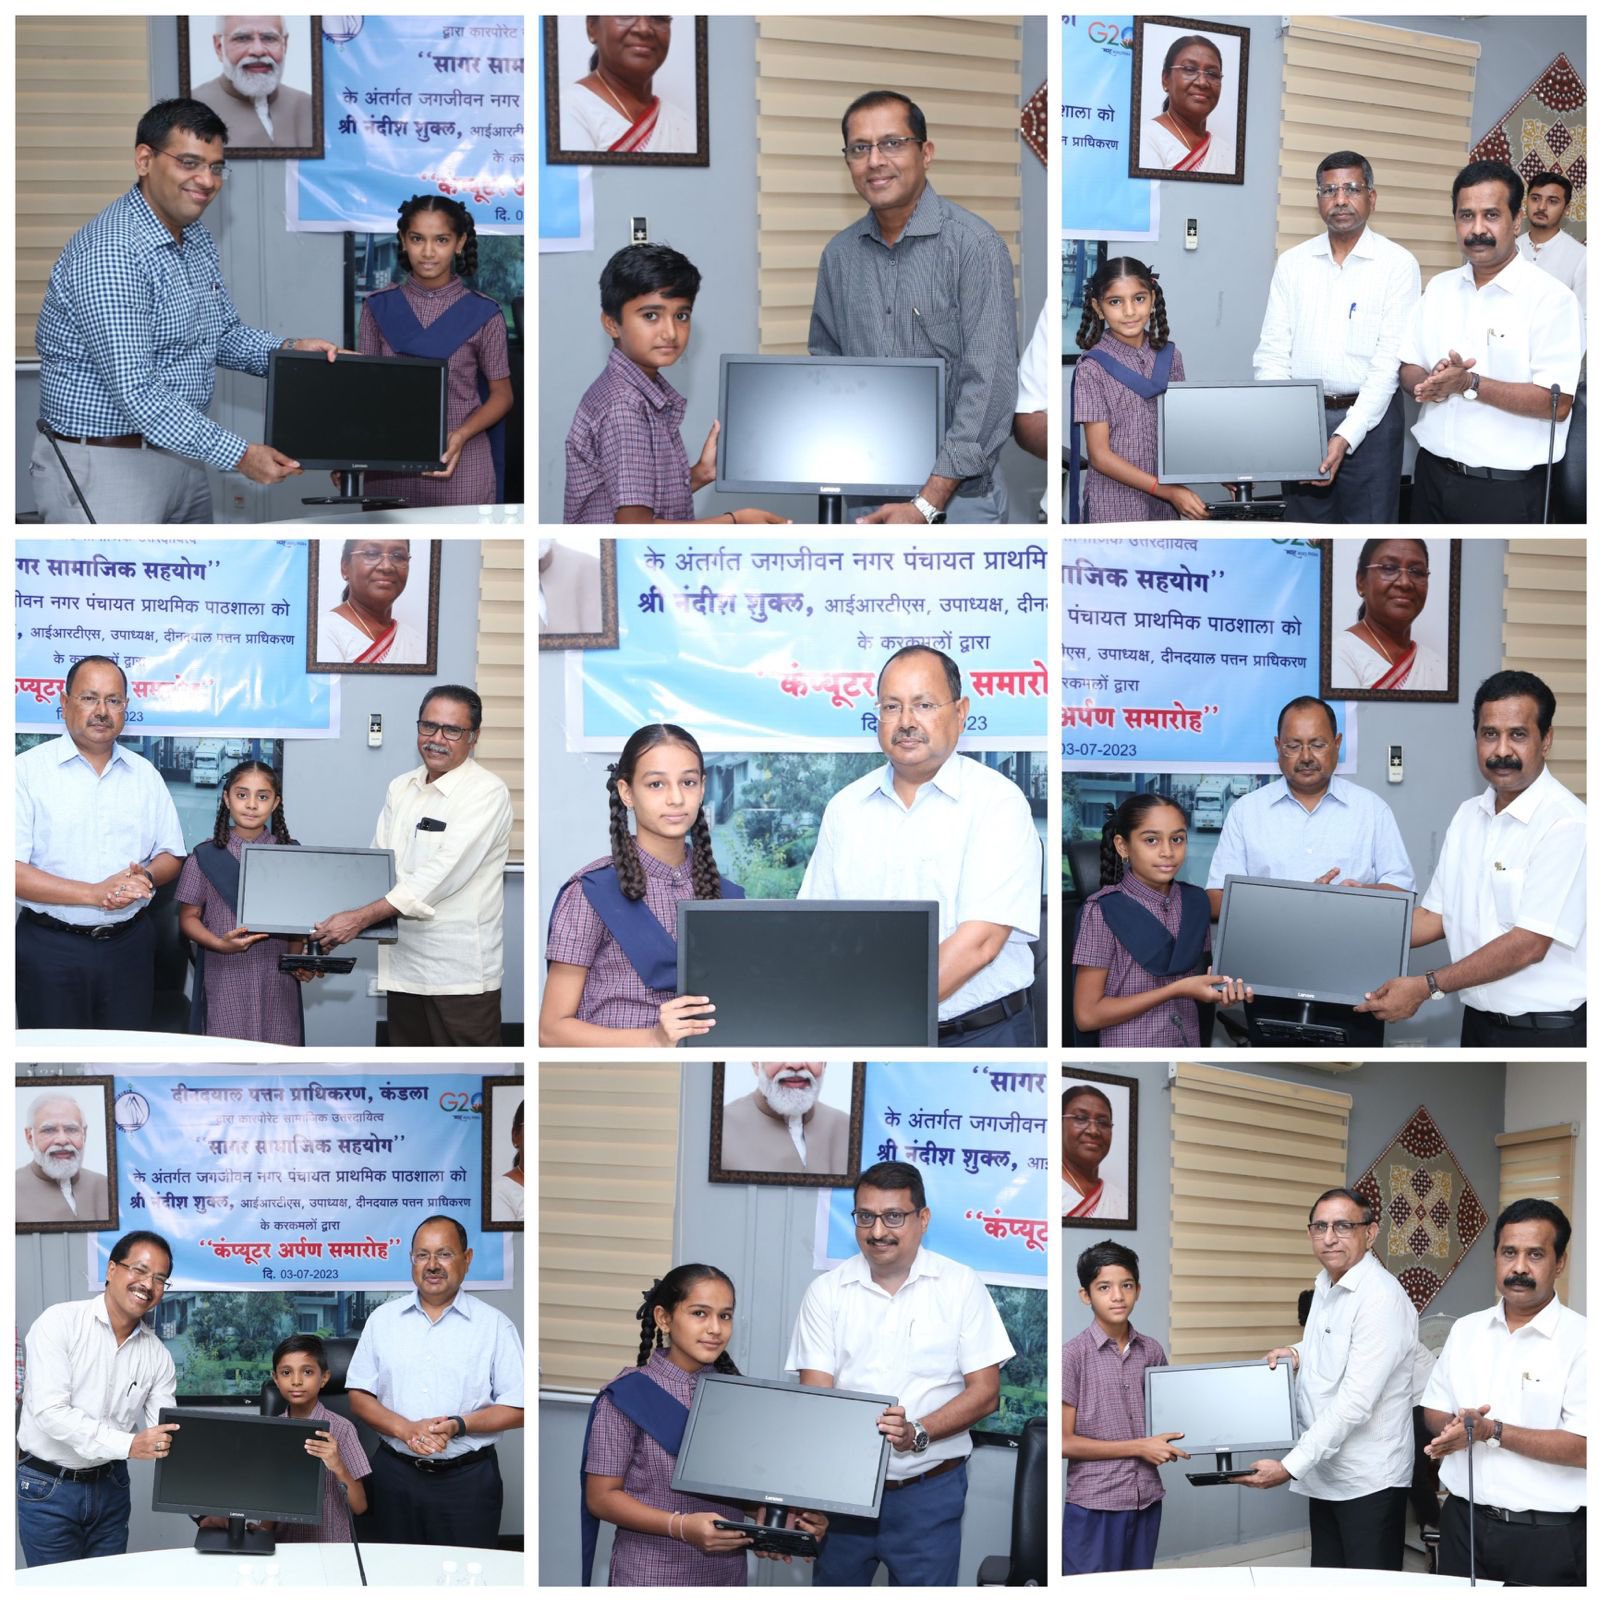 Shri S.K. Mehta, IFS, Chairman handed over 10 Computers to Jagjivannagar, Panchayat Prathmik Shala, for computer literacy under CSR Scheme